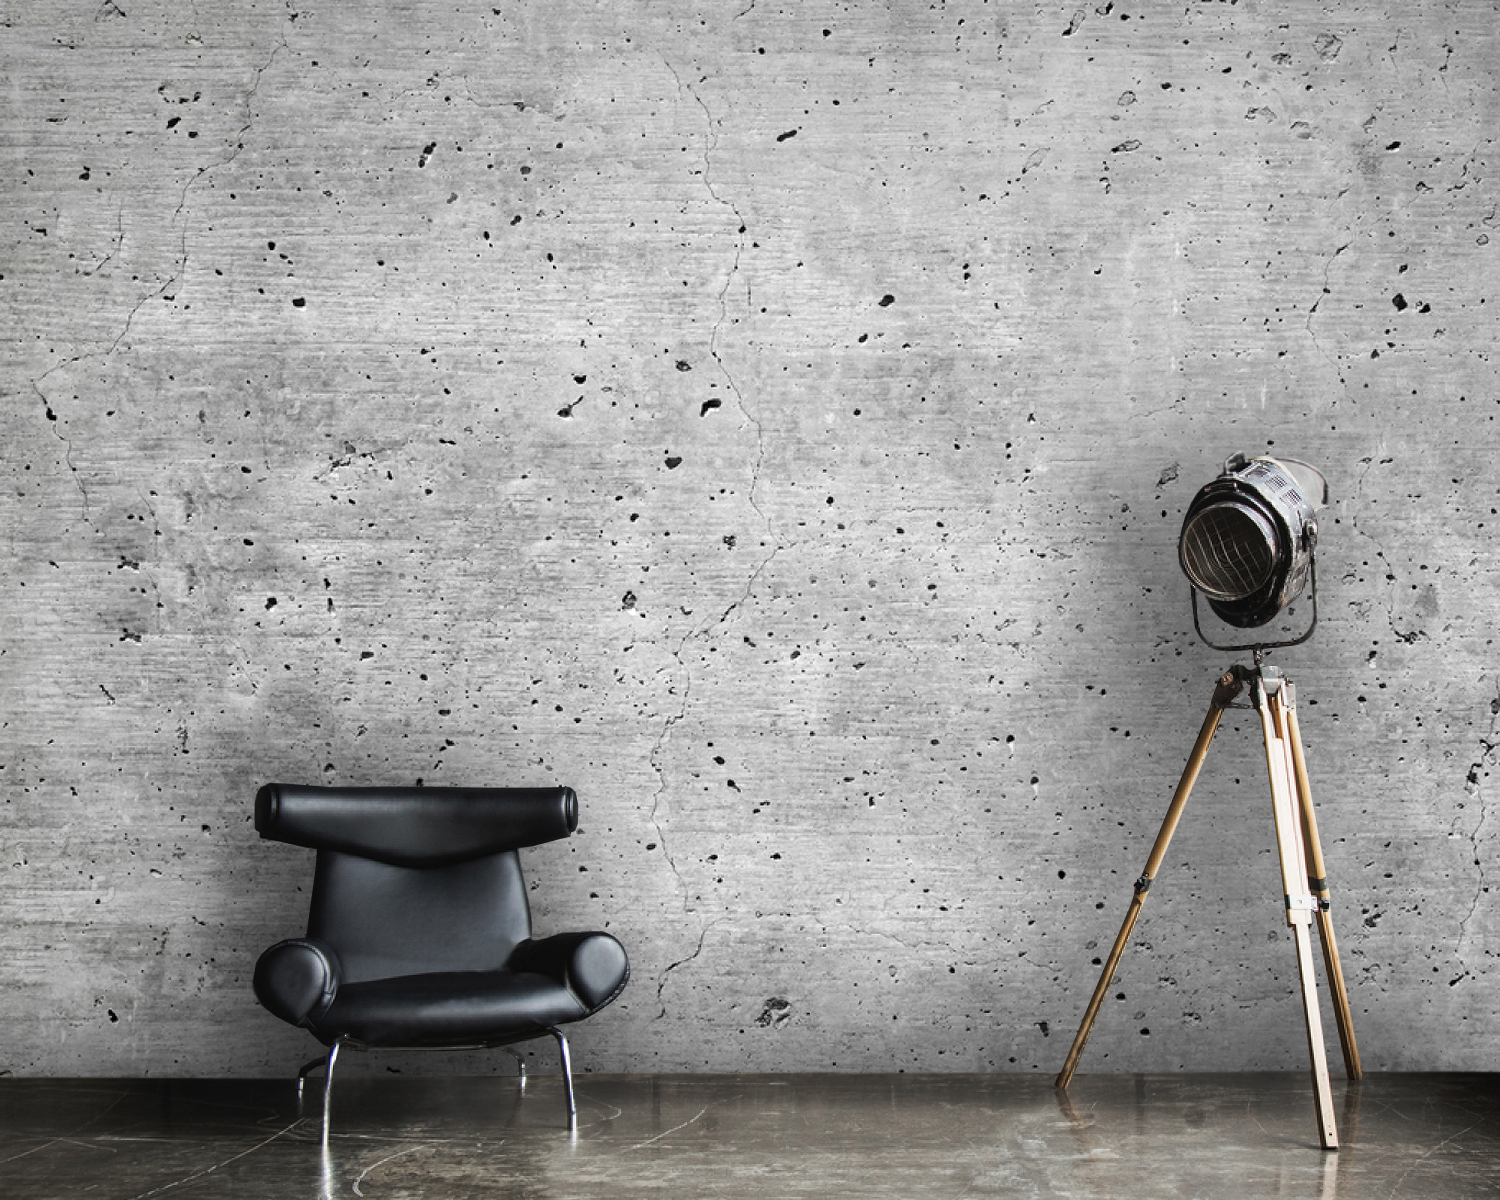 industrial design wallpaper,wall,still life photography,floor,chair,wallpaper